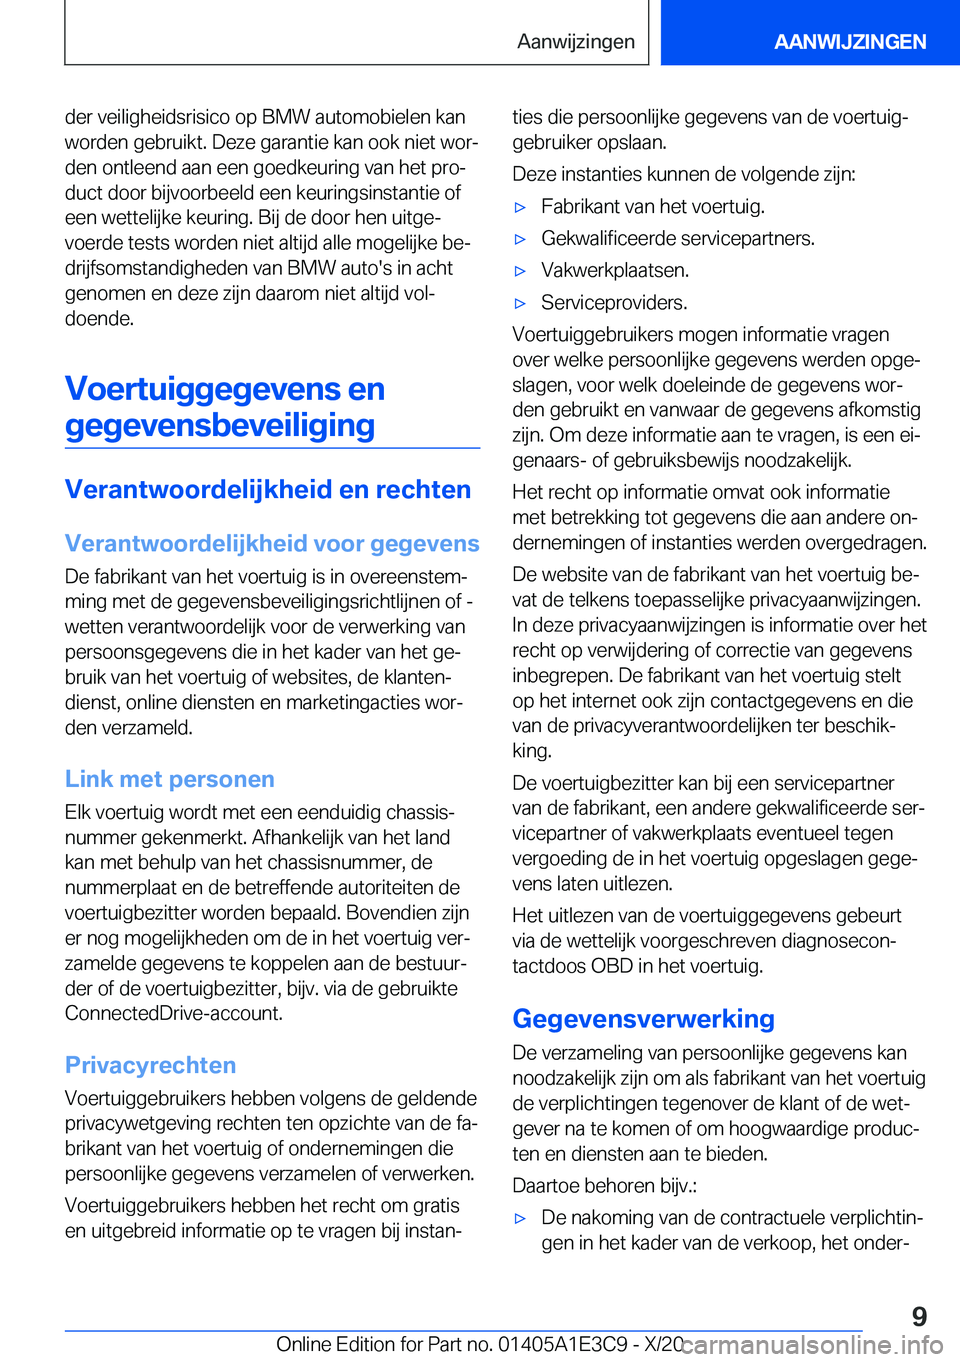 BMW M4 2021  Instructieboekjes (in Dutch) �d�e�r��v�e�i�l�i�g�h�e�i�d�s�r�i�s�i�c�o��o�p��B�M�W��a�u�t�o�m�o�b�i�e�l�e�n��k�a�n
�w�o�r�d�e�n��g�e�b�r�u�i�k�t�.��D�e�z�e��g�a�r�a�n�t�i�e��k�a�n��o�o�k��n�i�e�t��w�o�rj
�d�e�n��o�n